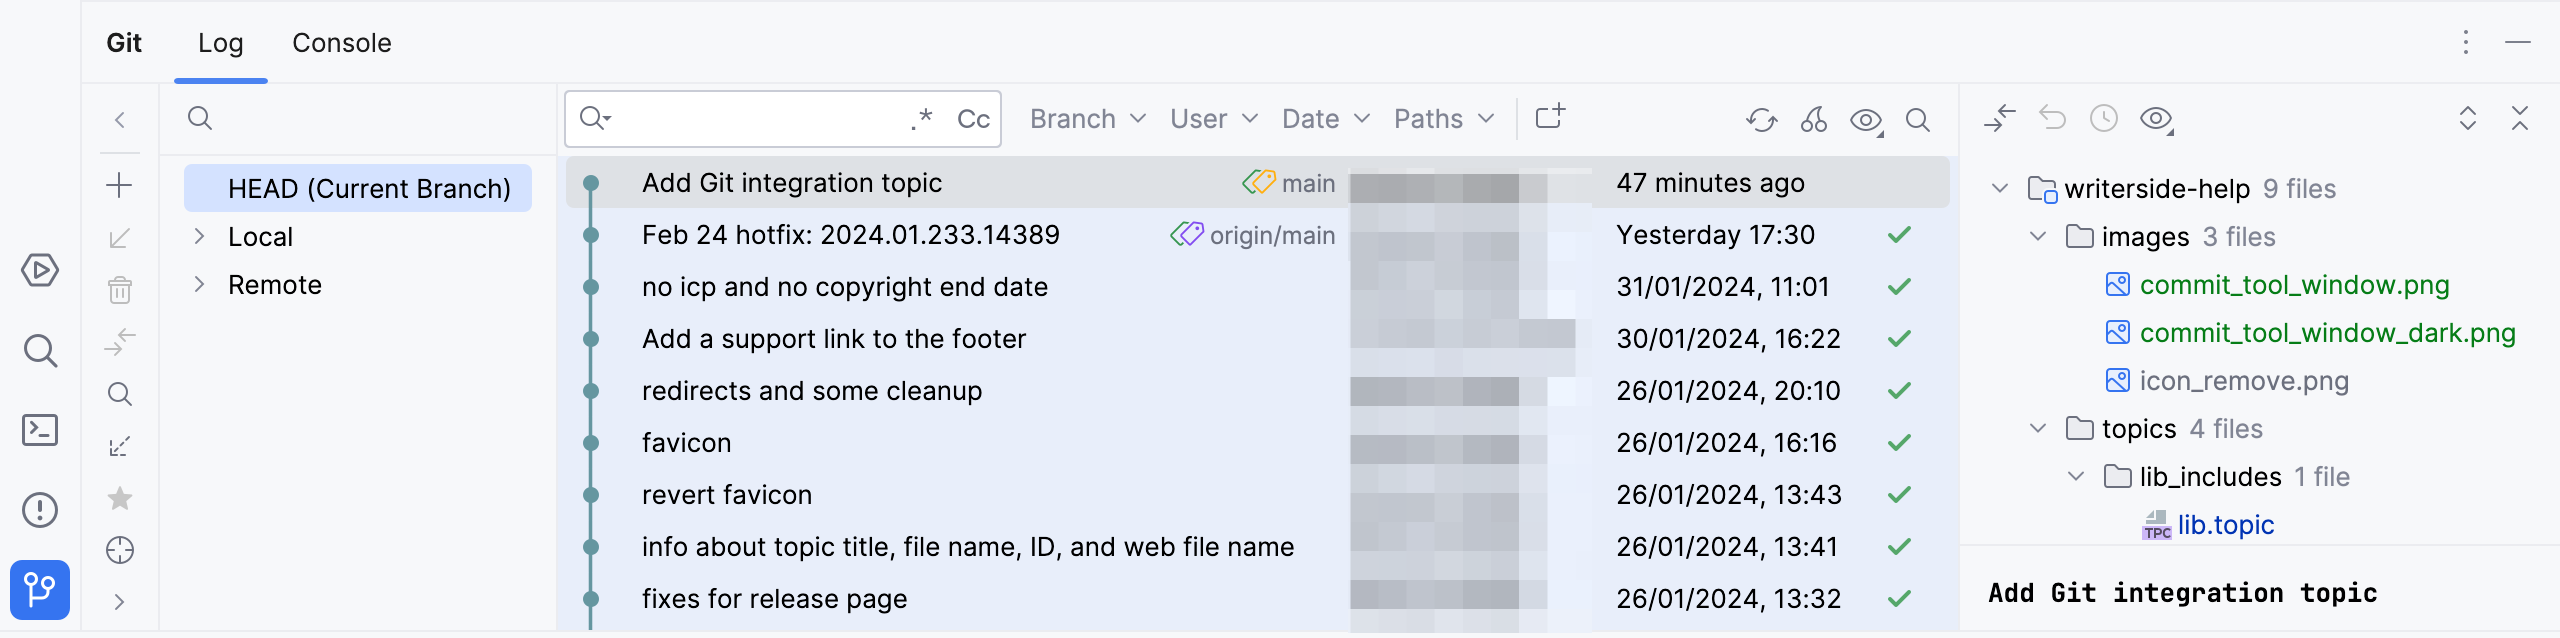 Git tool window: Log tab